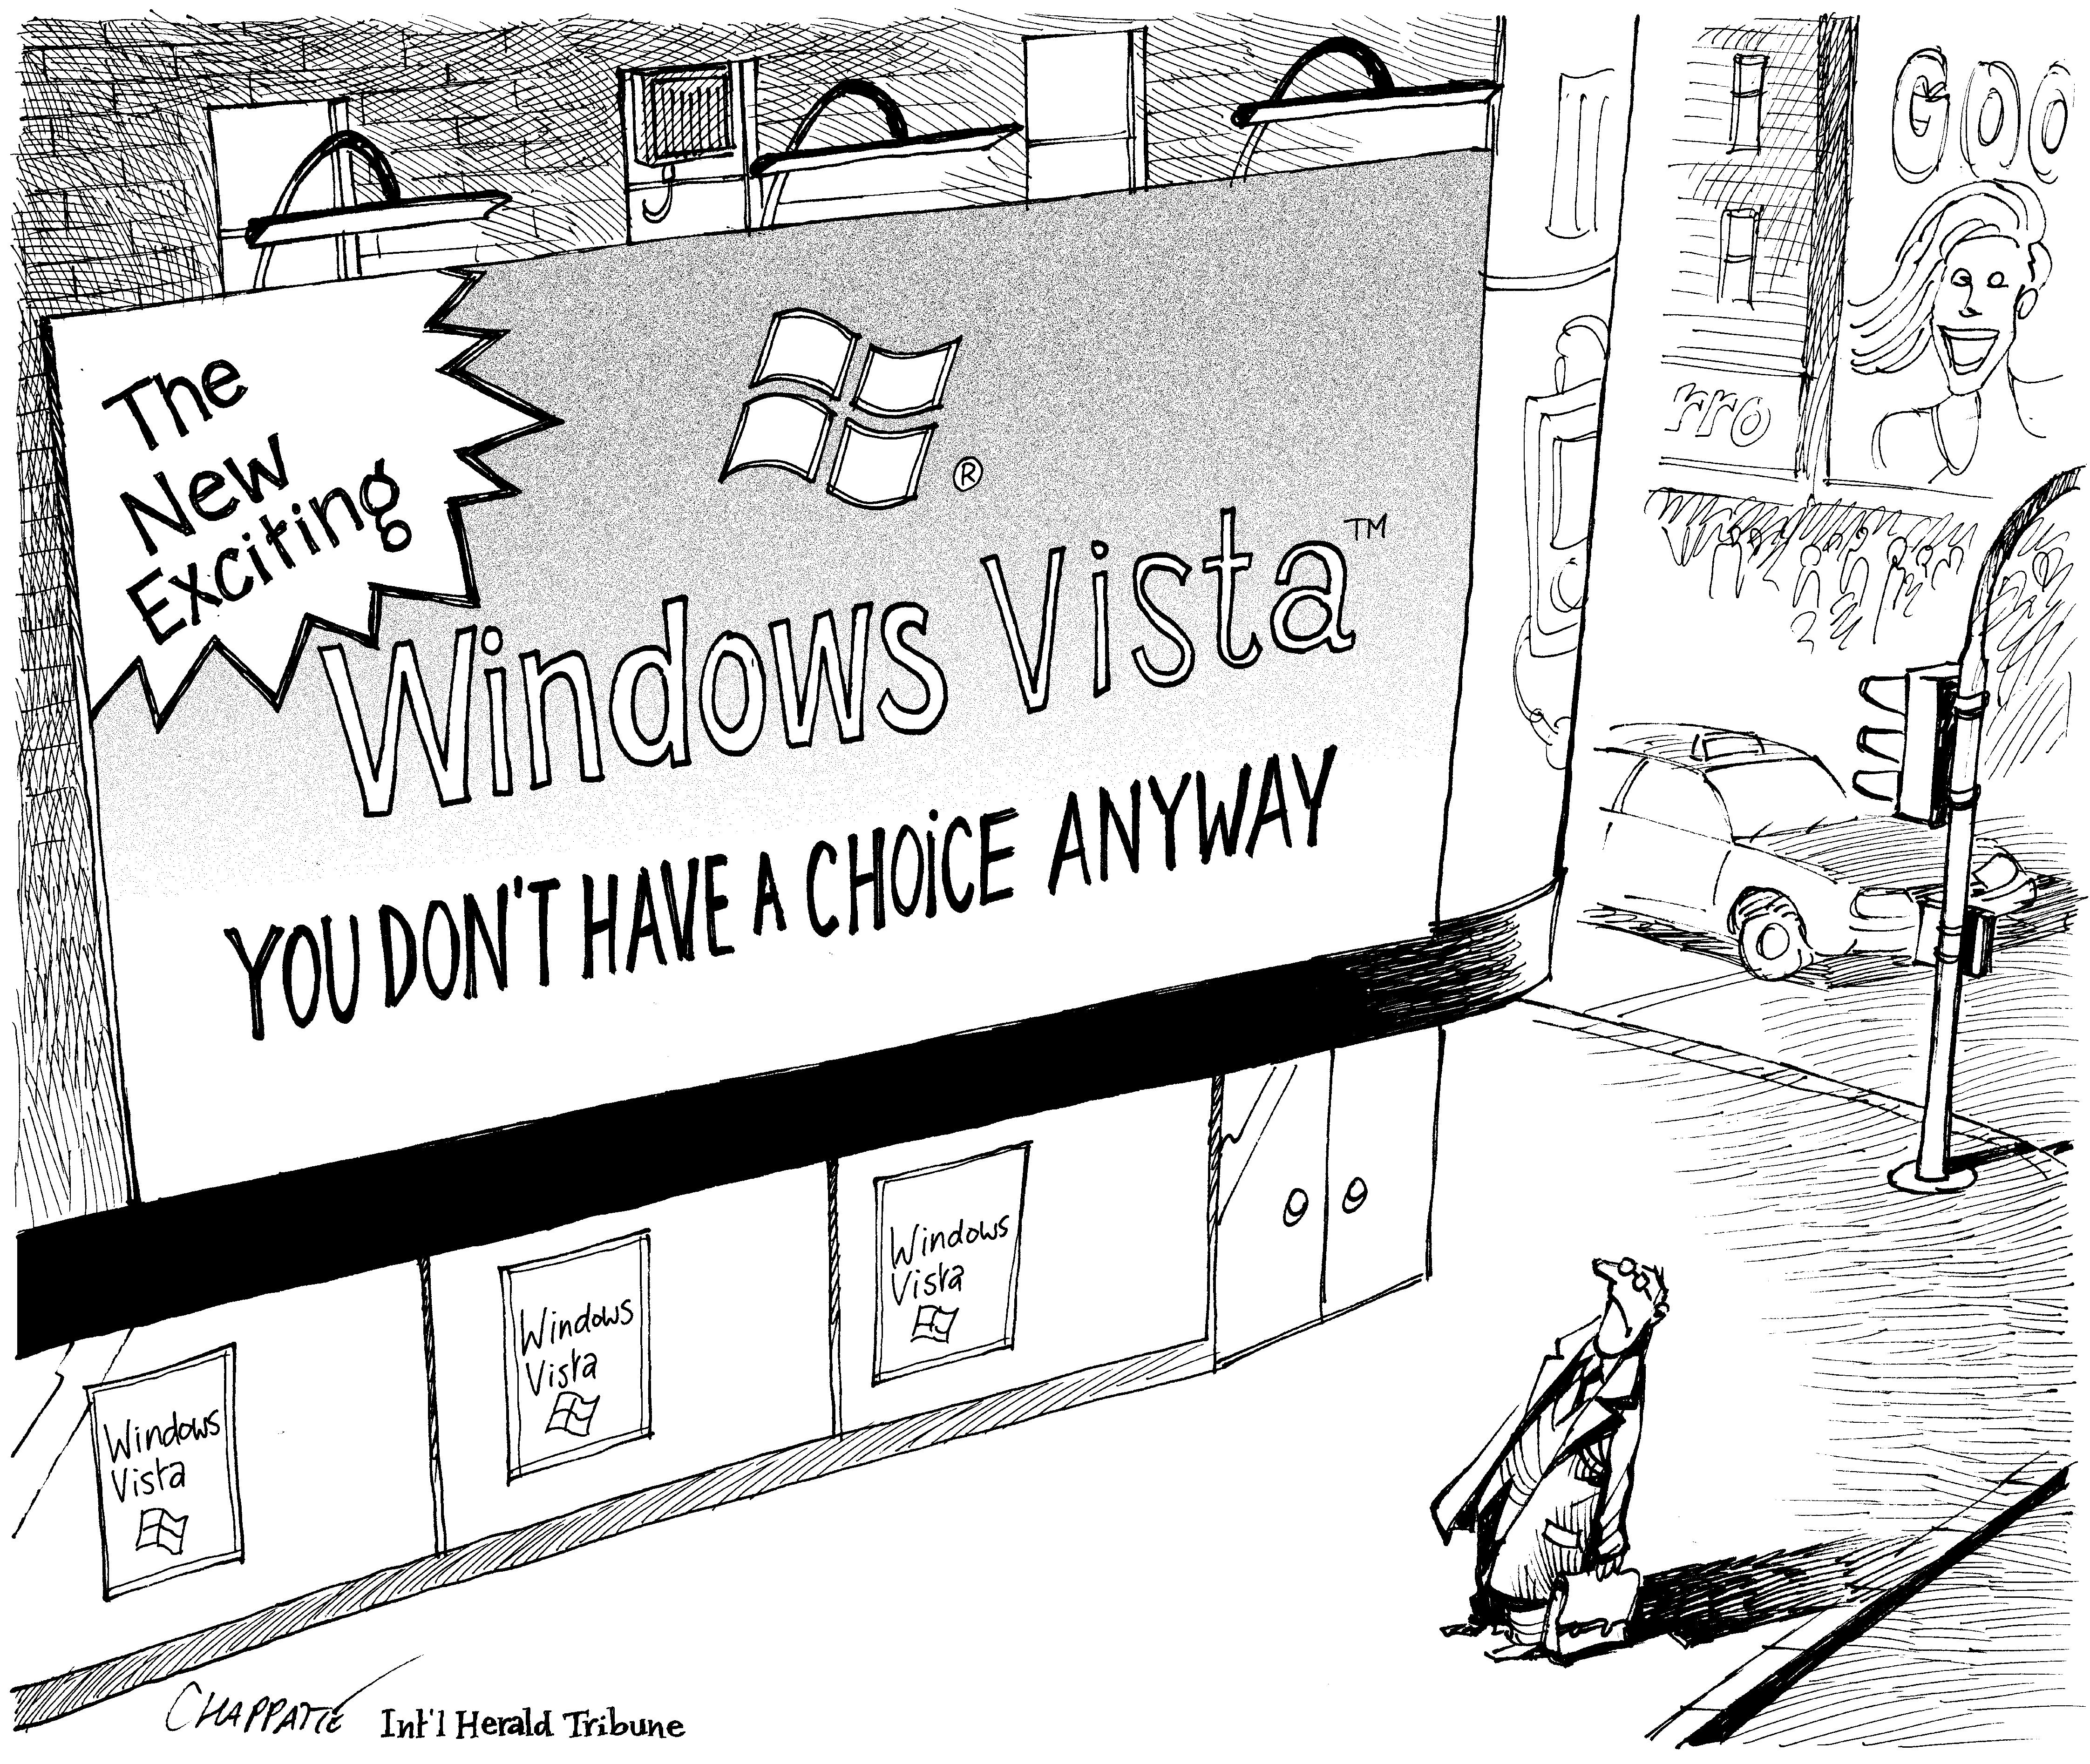 The New Windows Vista